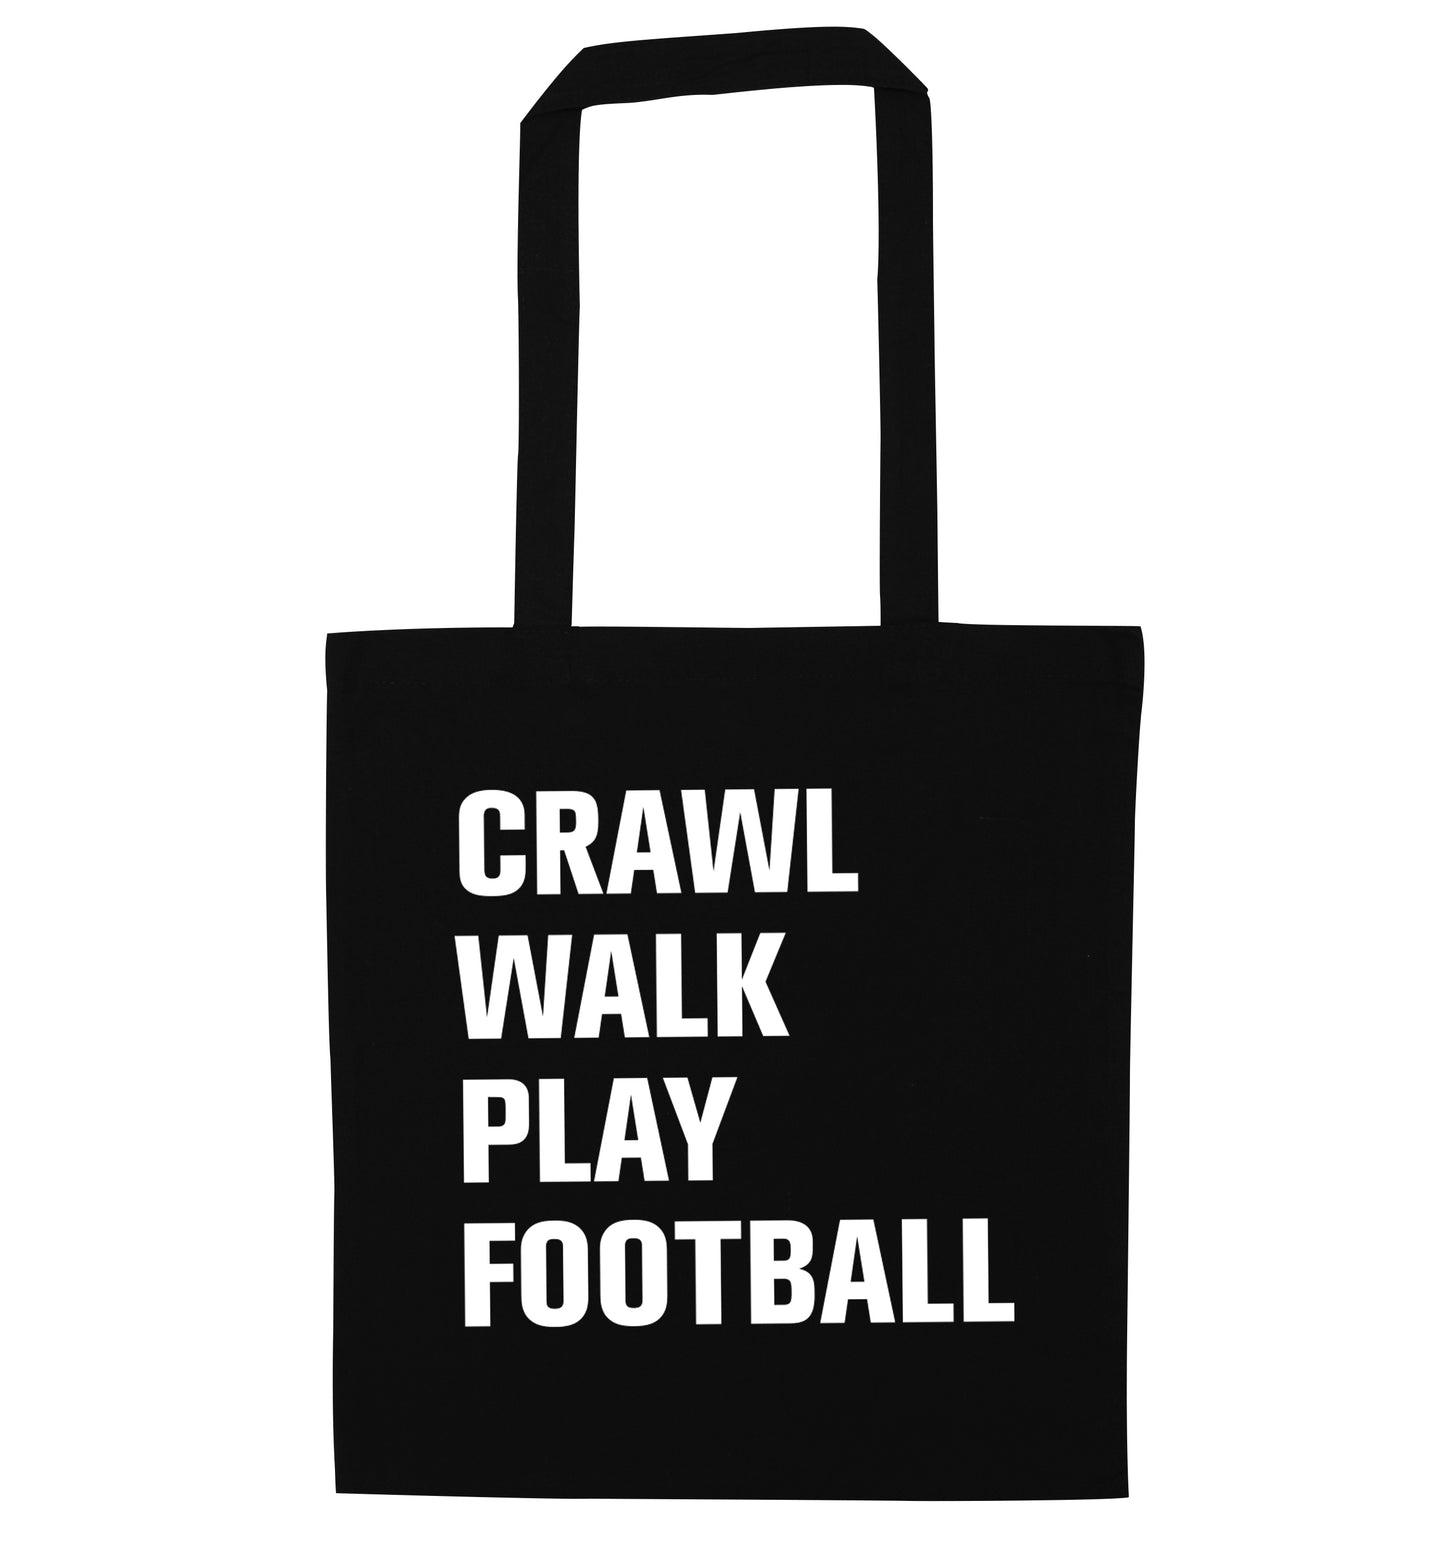 Crawl, walk, play football black tote bag